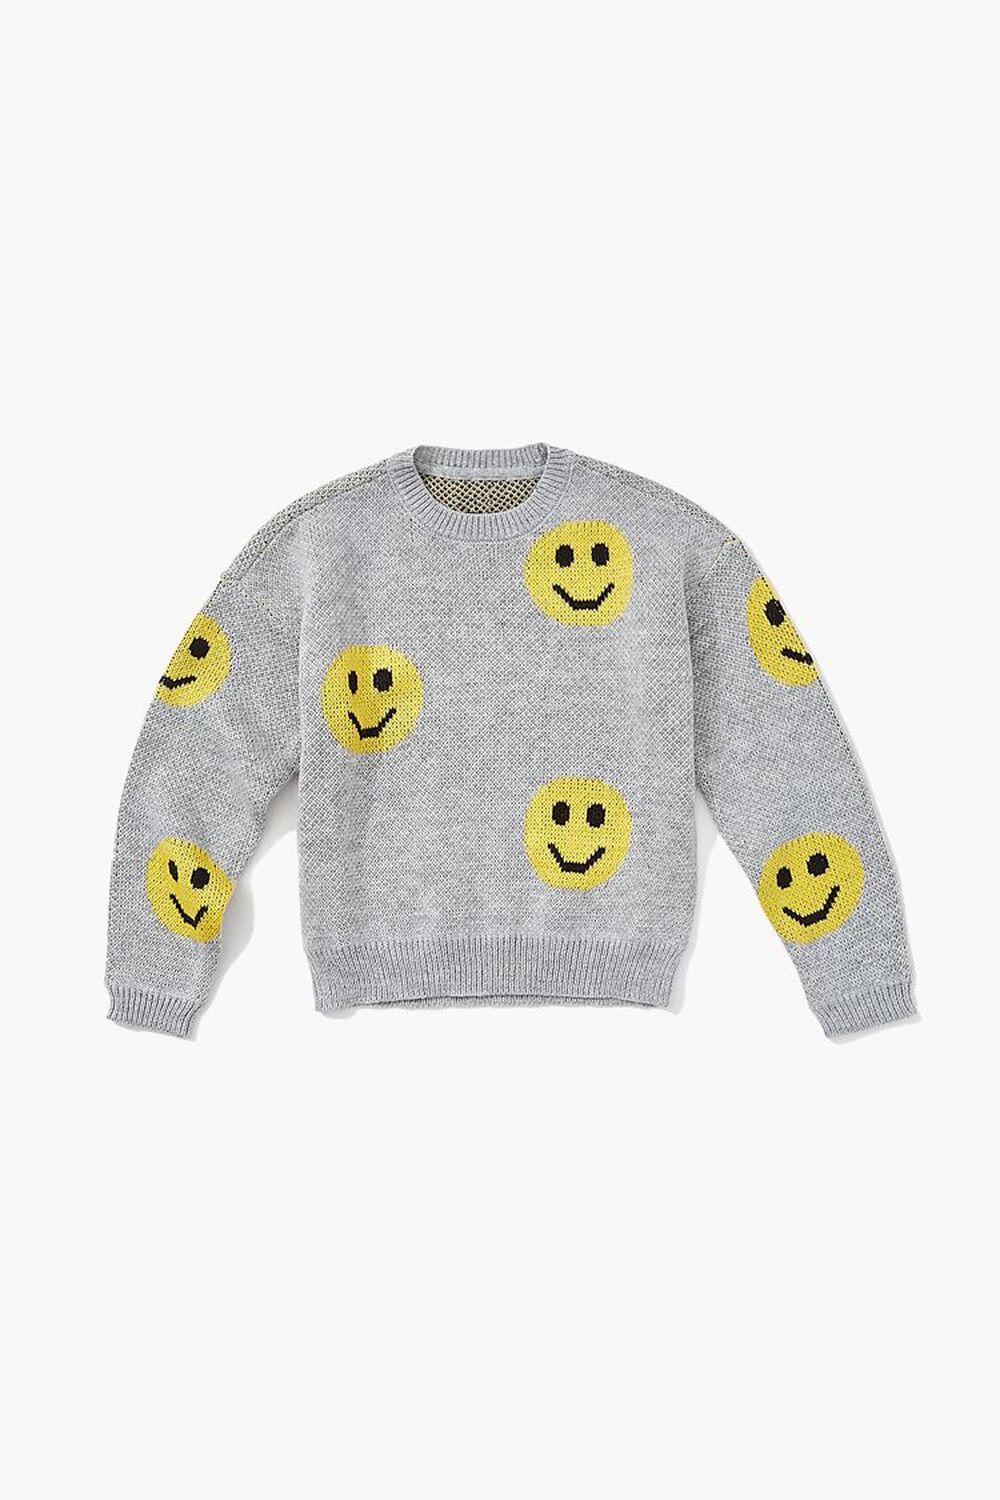 GREY/MULTI Girls Happy Face Sweater (Kids), image 1